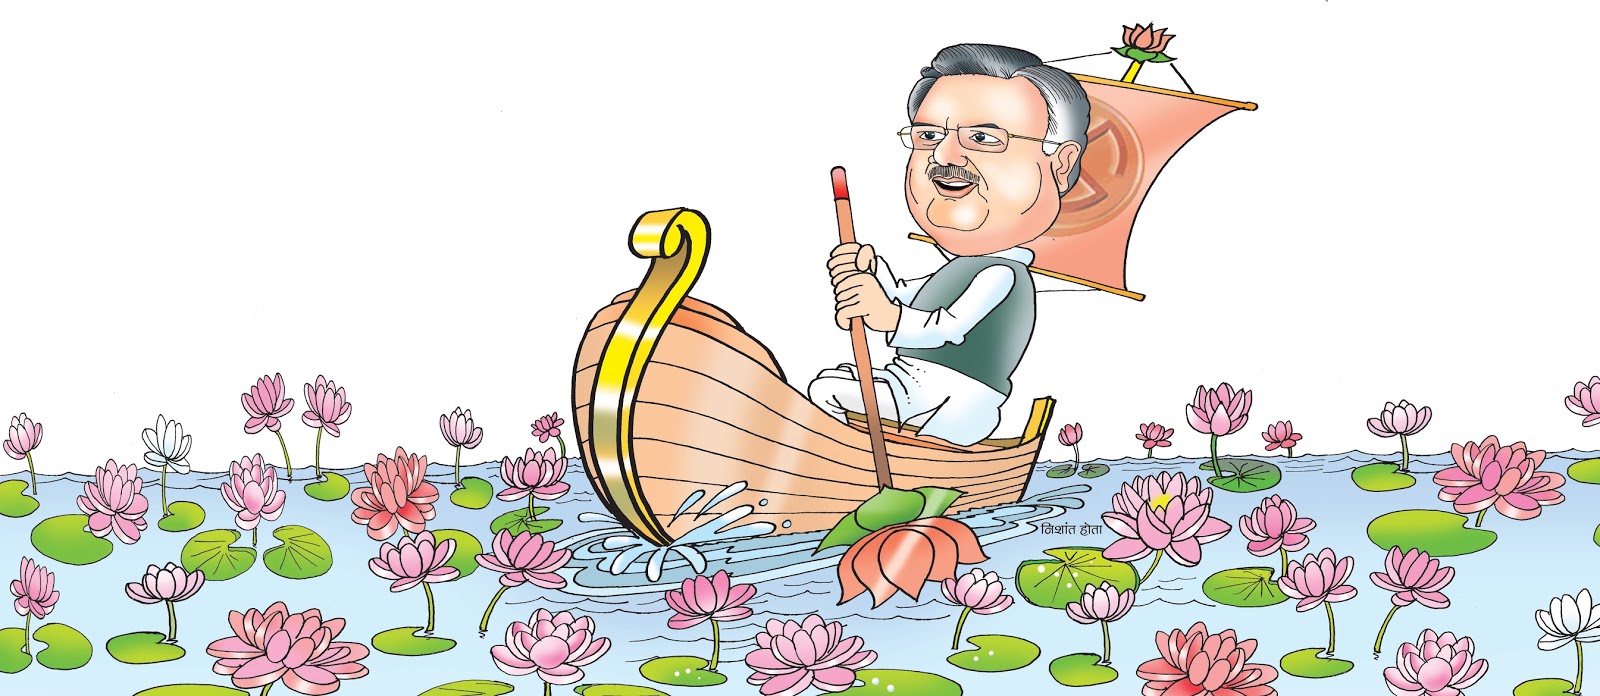 HALKE-FULKE cartoon:  Singh State Budget 2018 chhattisgarh